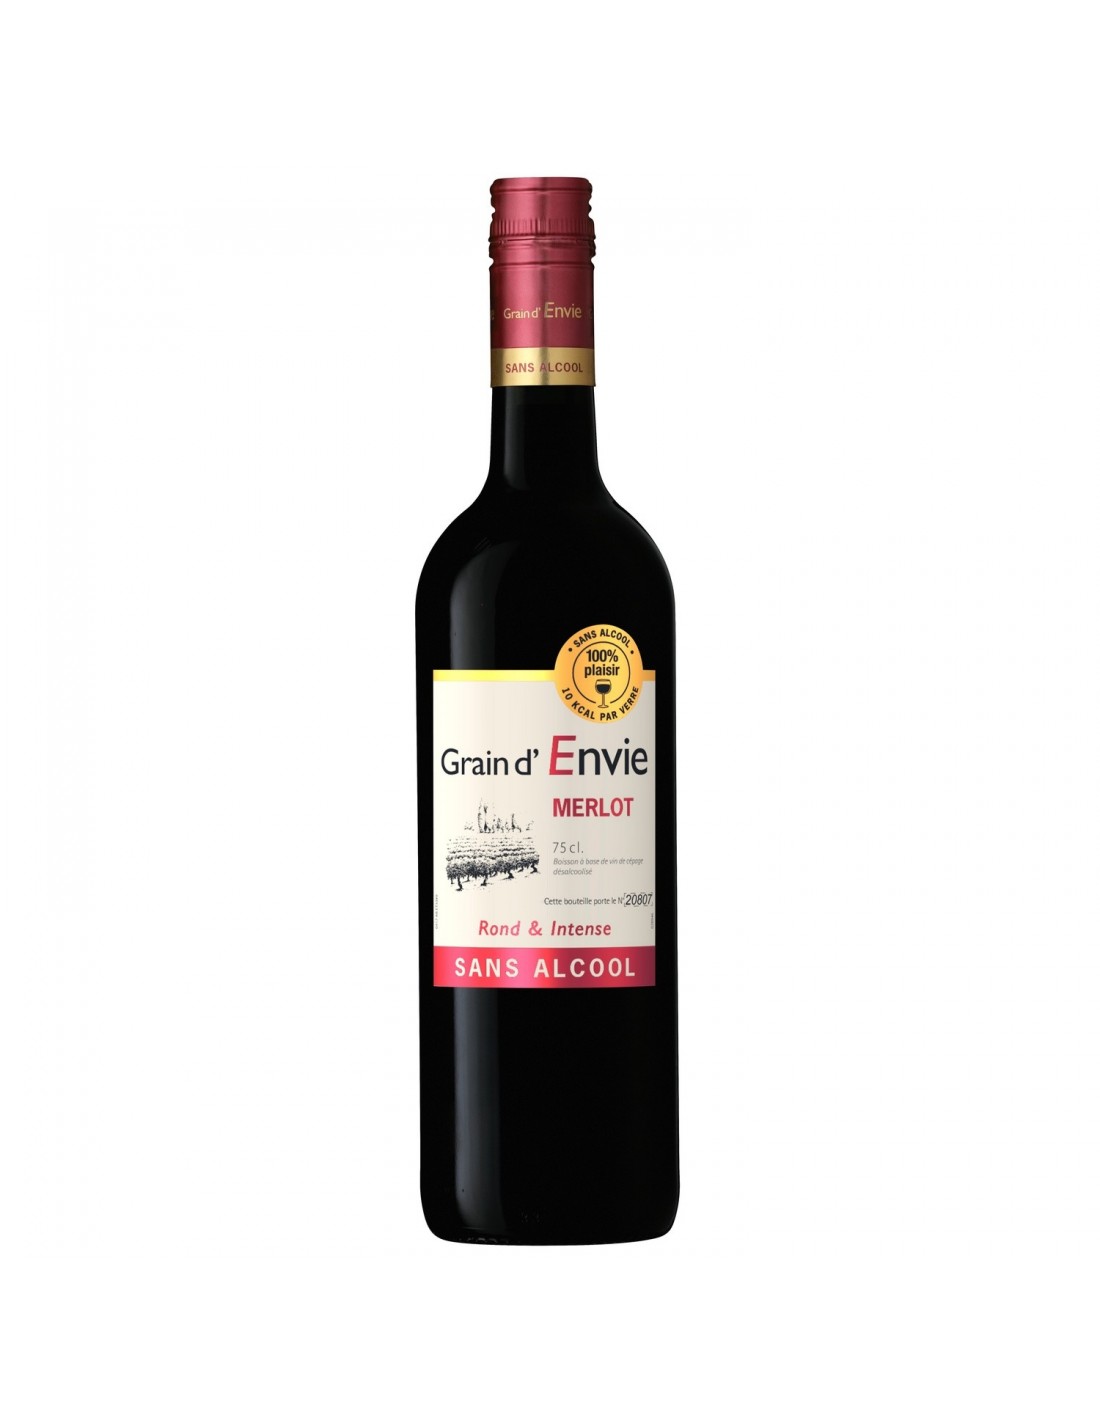 Vin rosu fara alcool, Merlot, Grain D’envie, 0.75L, 0% alc., Franta alcooldiscount.ro